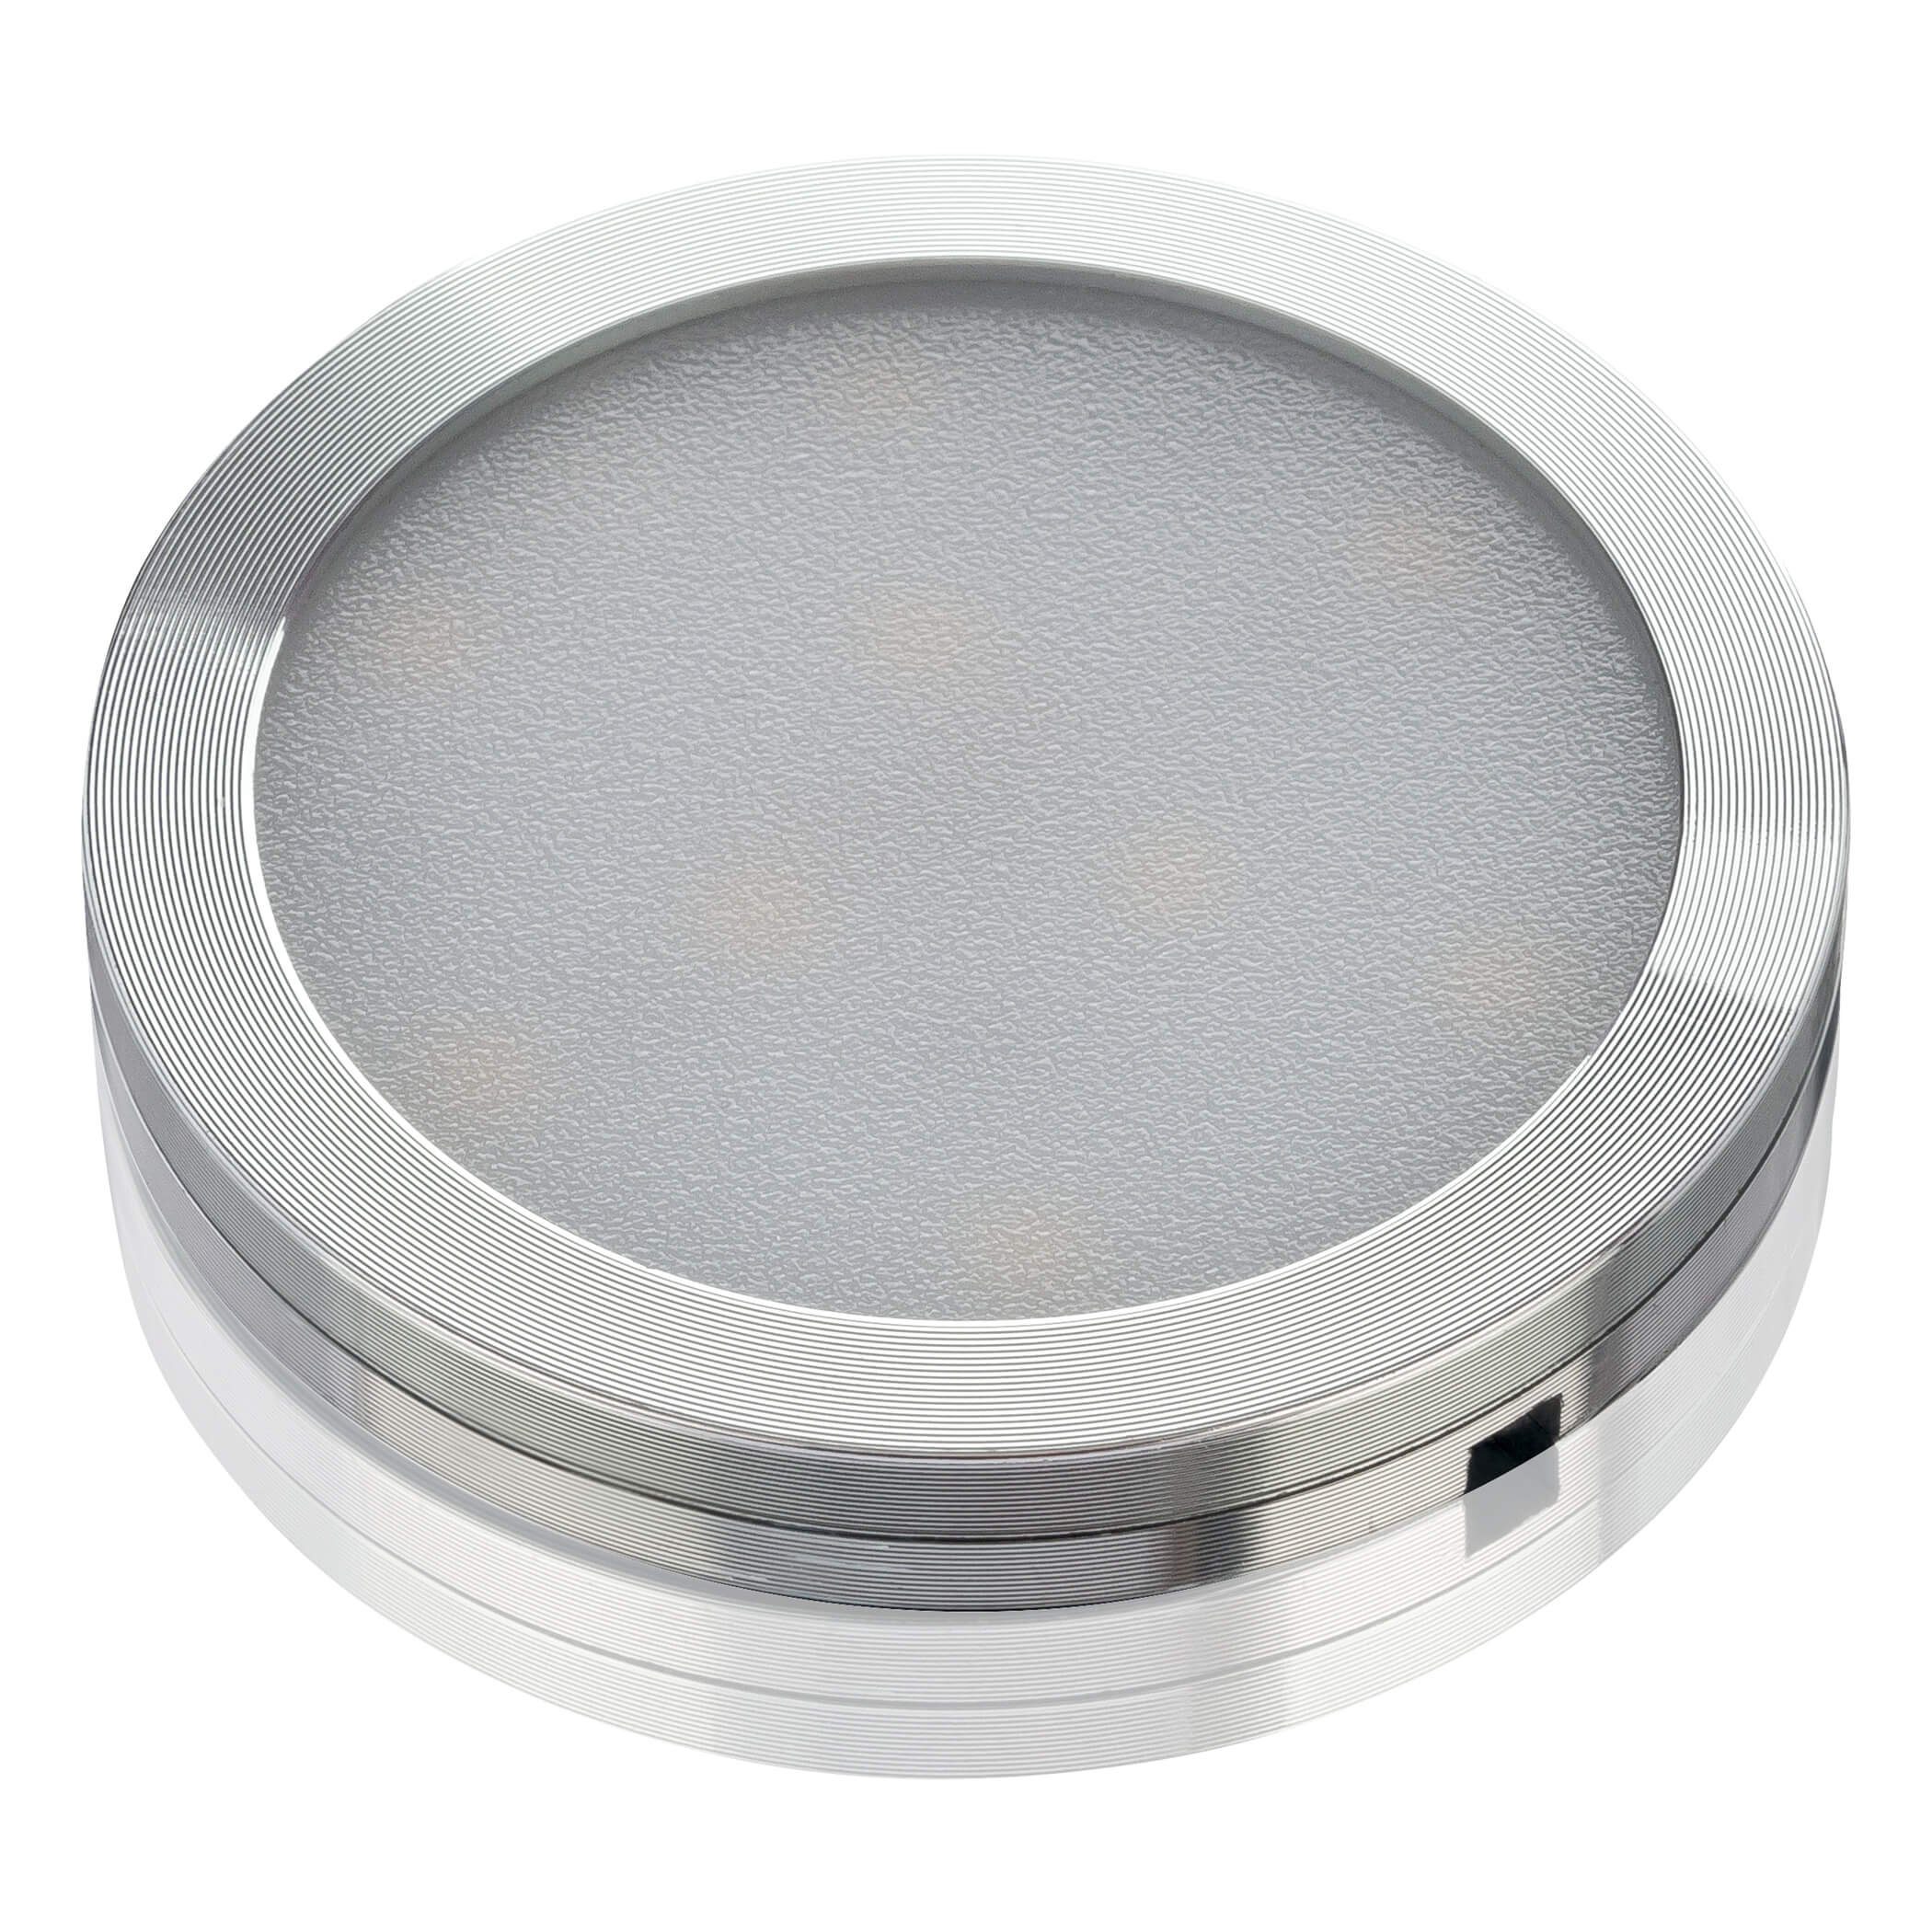 SEBSON Sensor, 8x warmweiß IR Schrankleuchte LED Set, 6er Aufbauleuchte 2W, 130lm dimmbar,